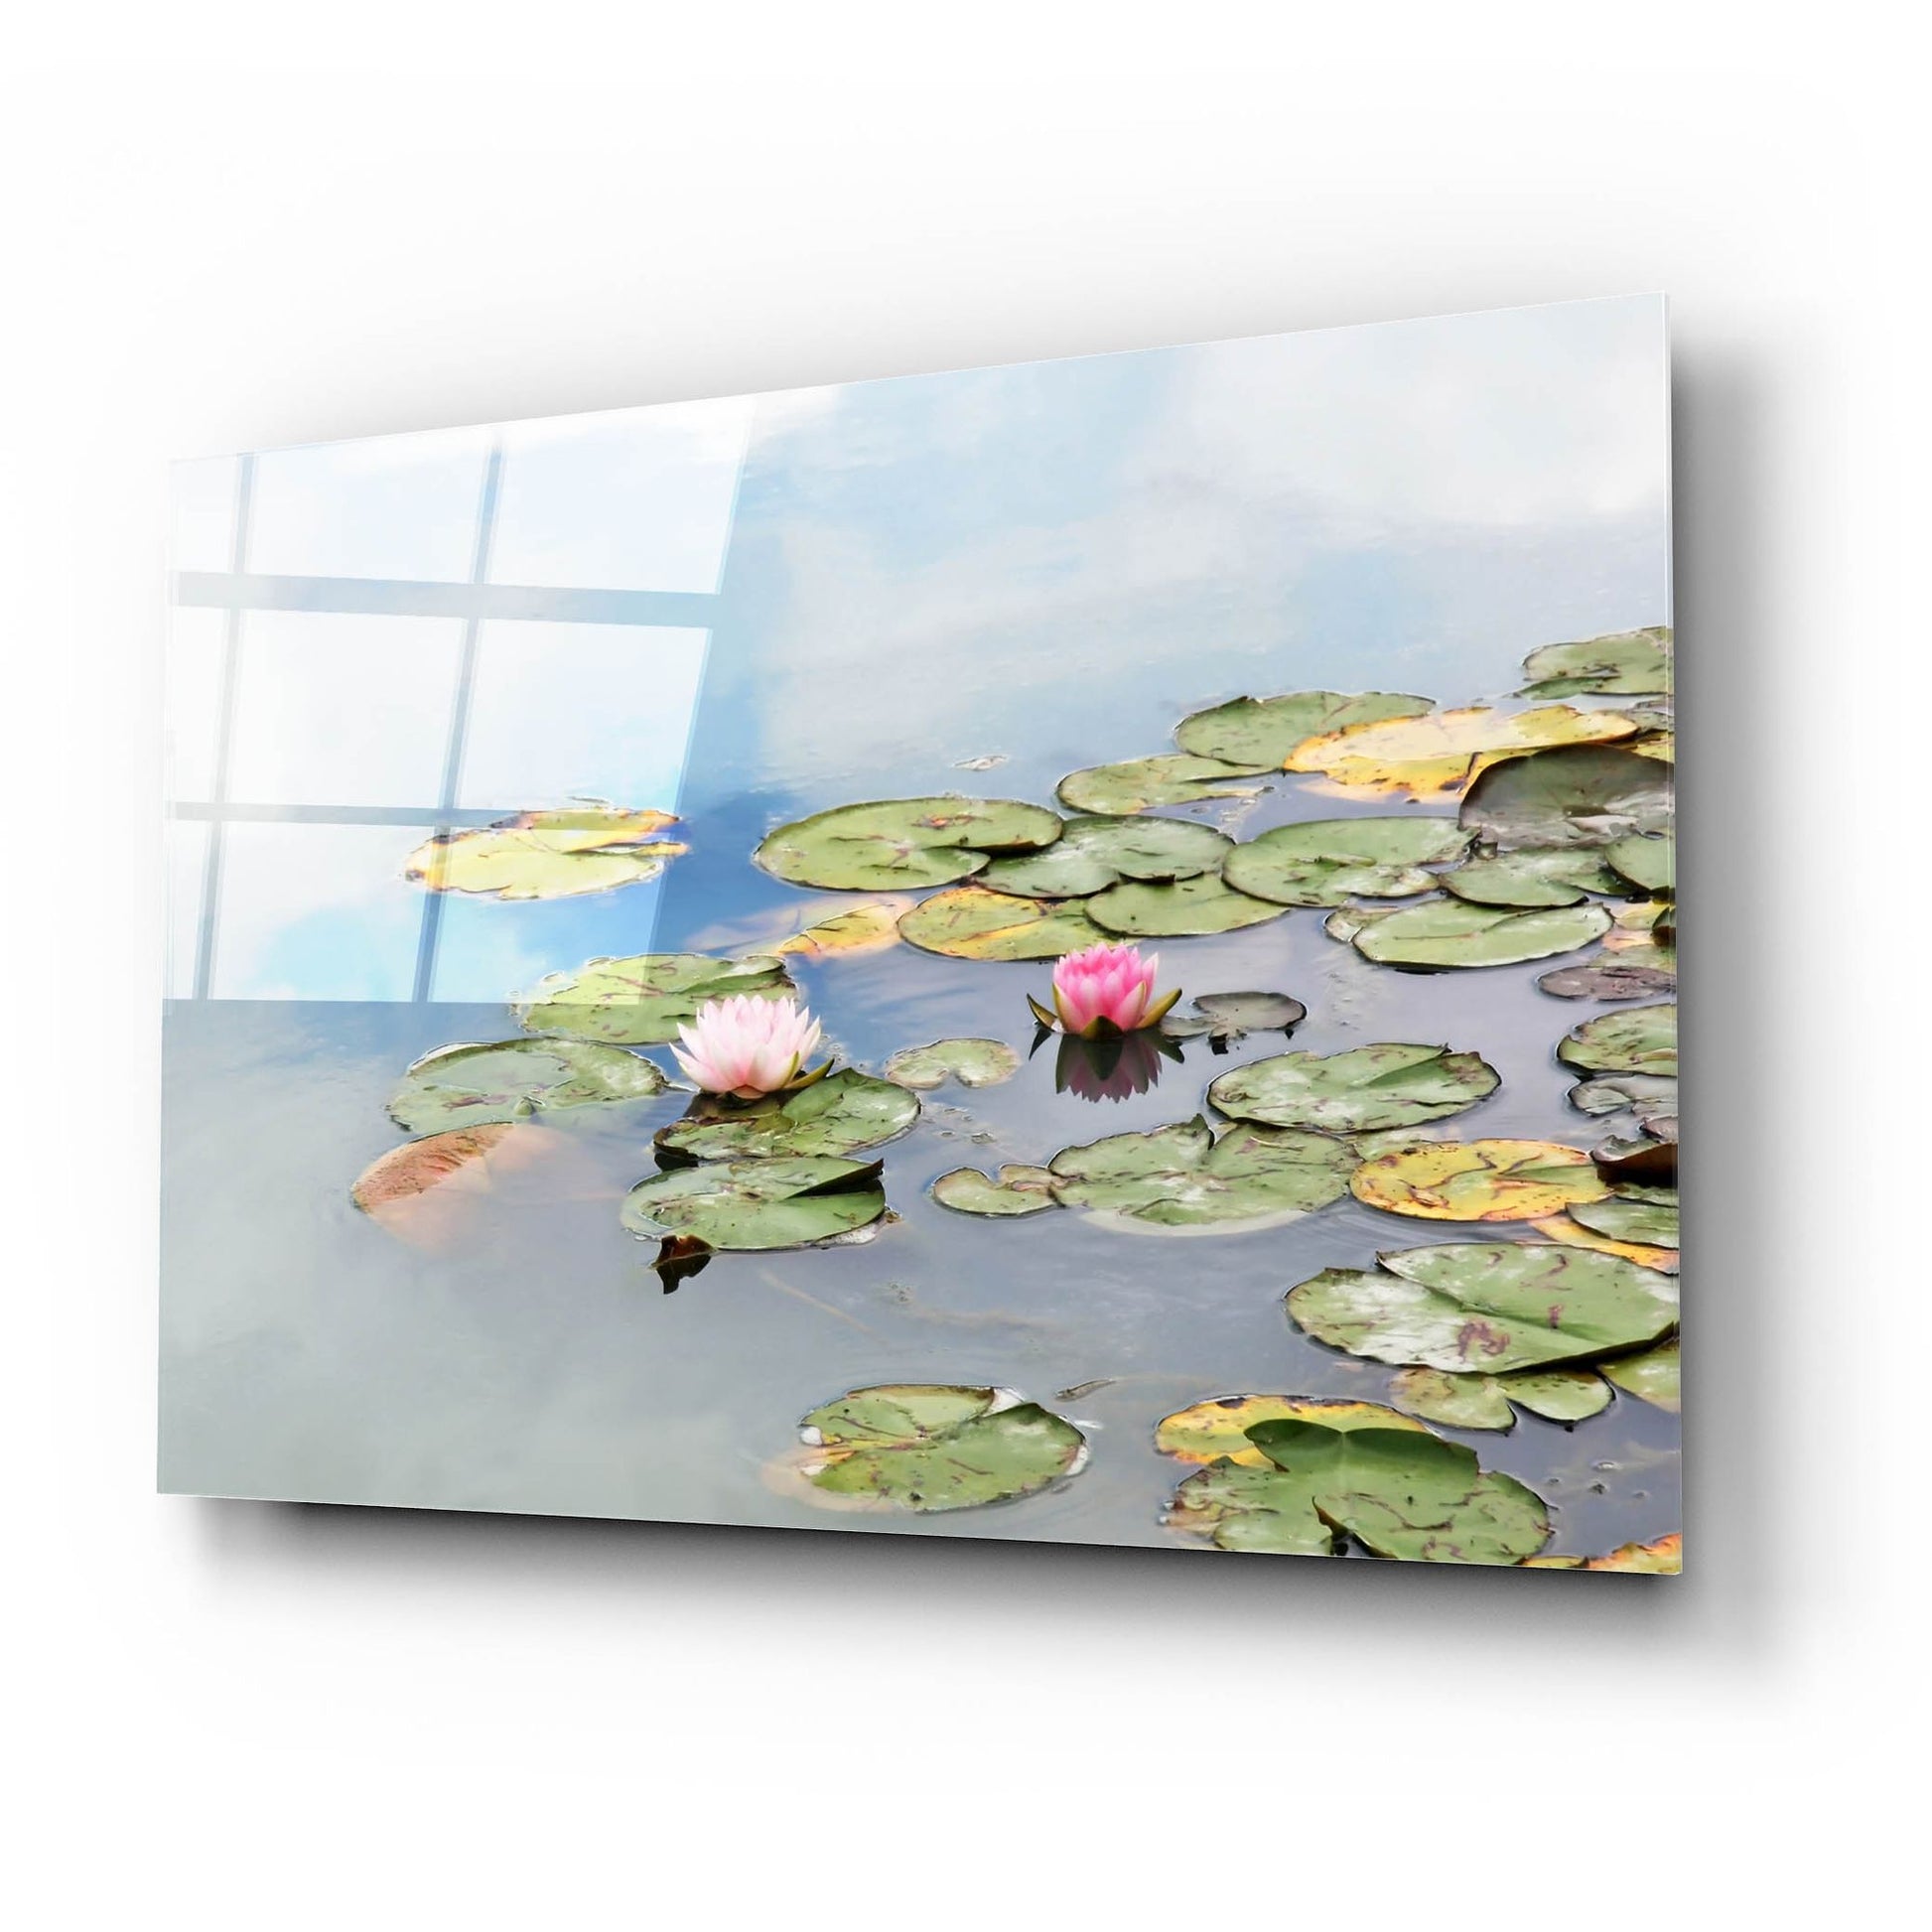 Epic Art ' Monet's Garden' by Brooke T. Ryan, Acrylic Glass Wall Art,24x16